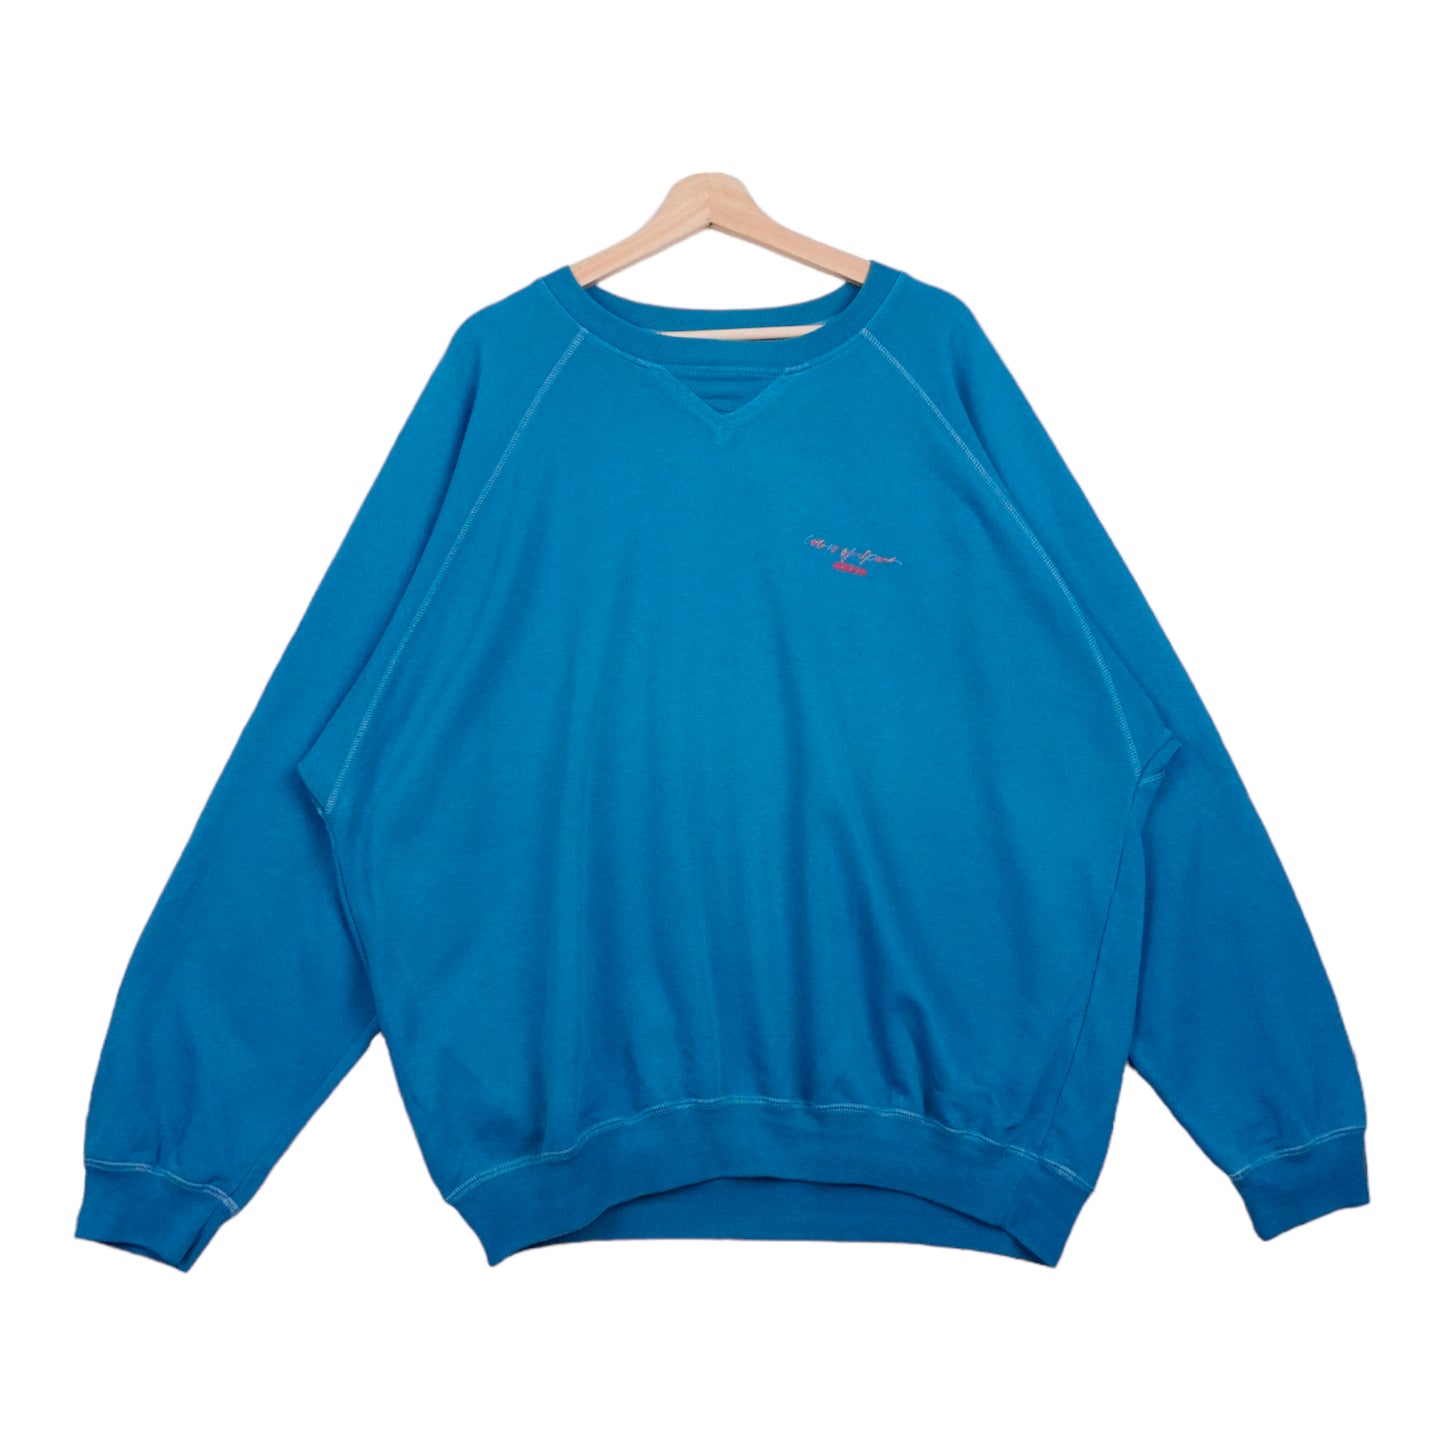 90s Adidas Sweatshirt Turquoise  L/XL